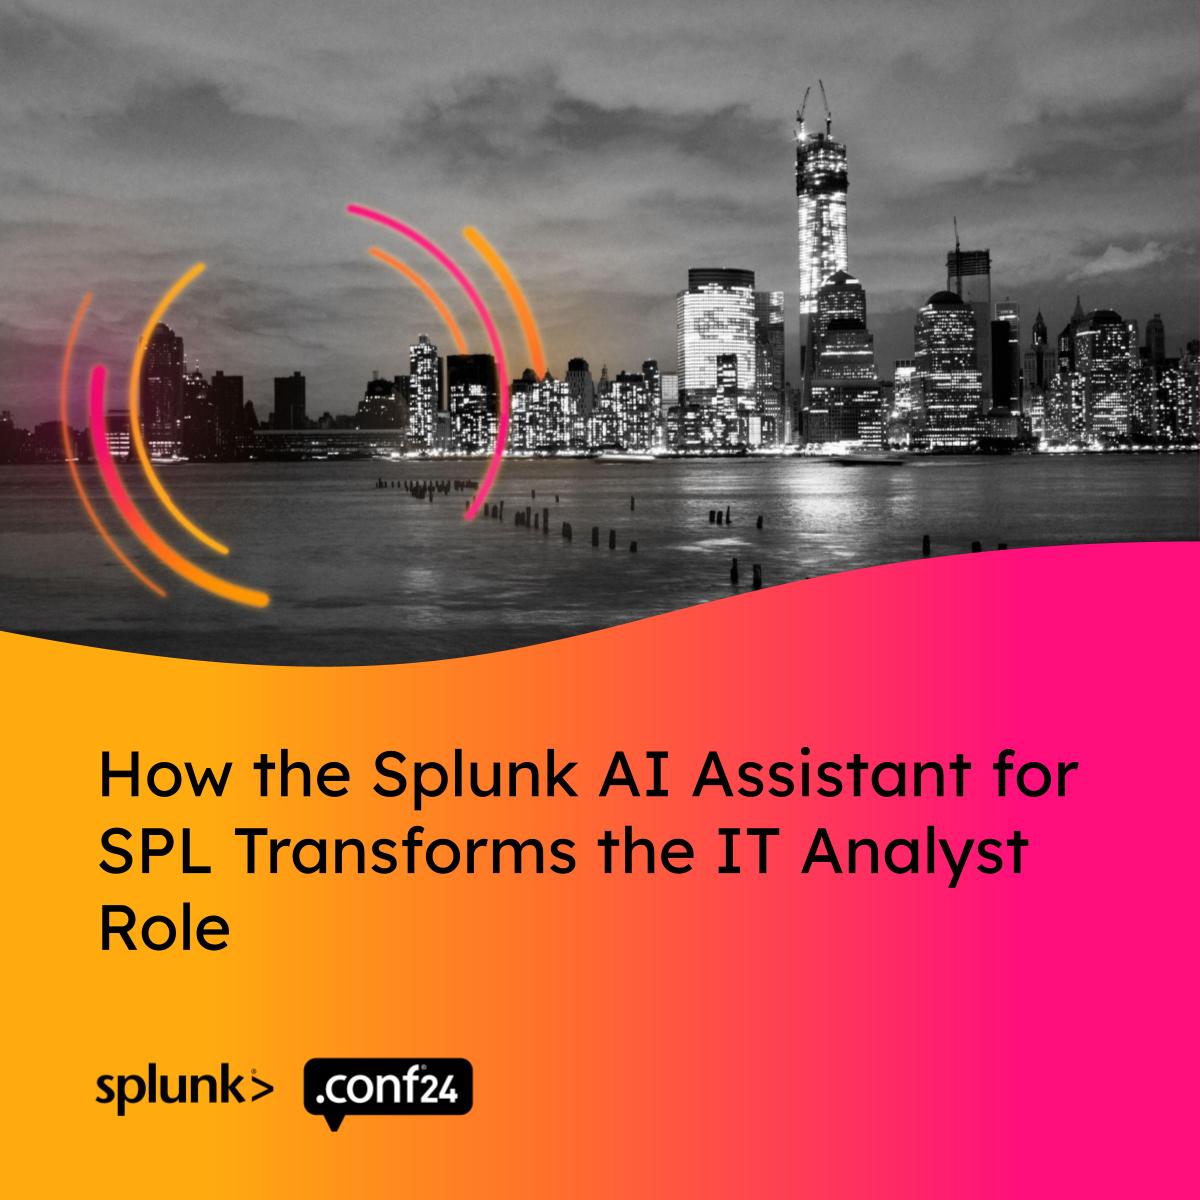 Splunk AI Assistant for SPL